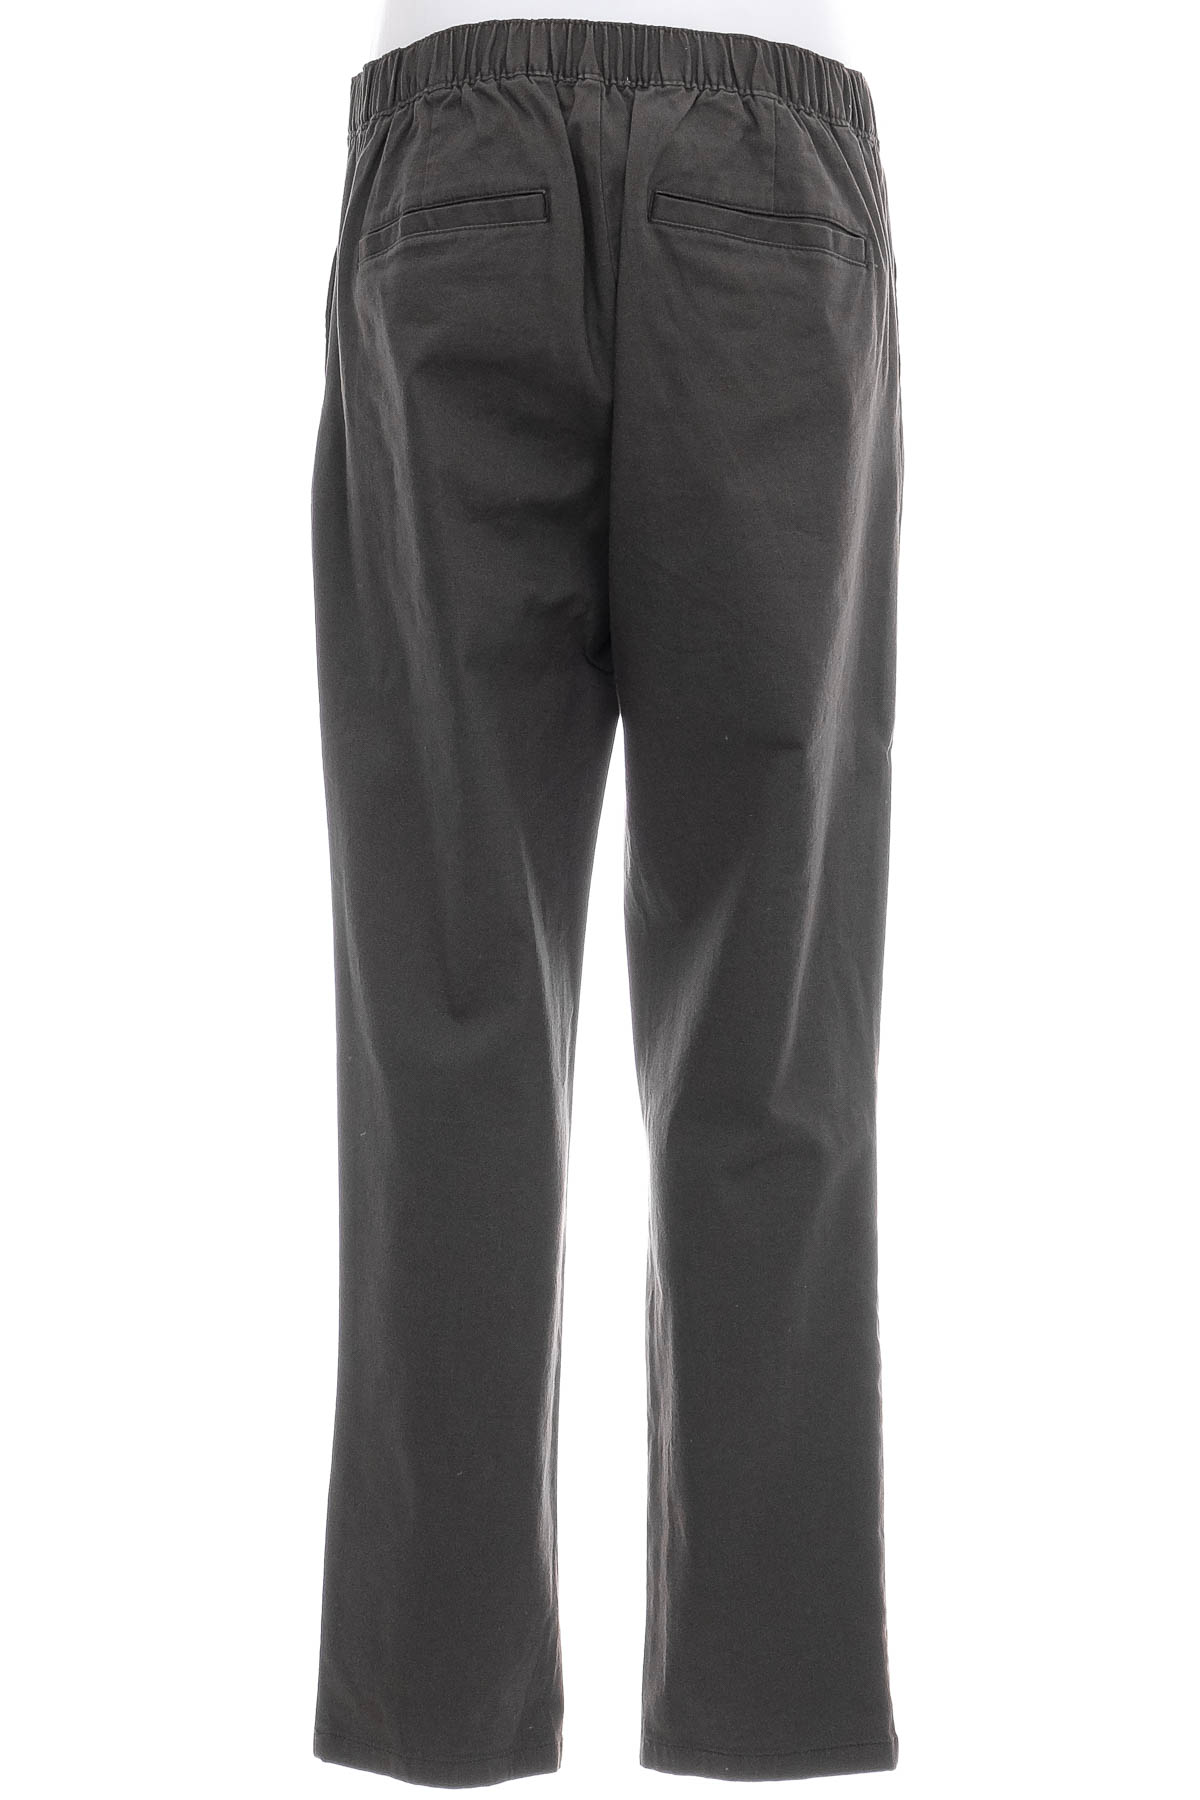 Pantalon pentru bărbați - Asos - 1